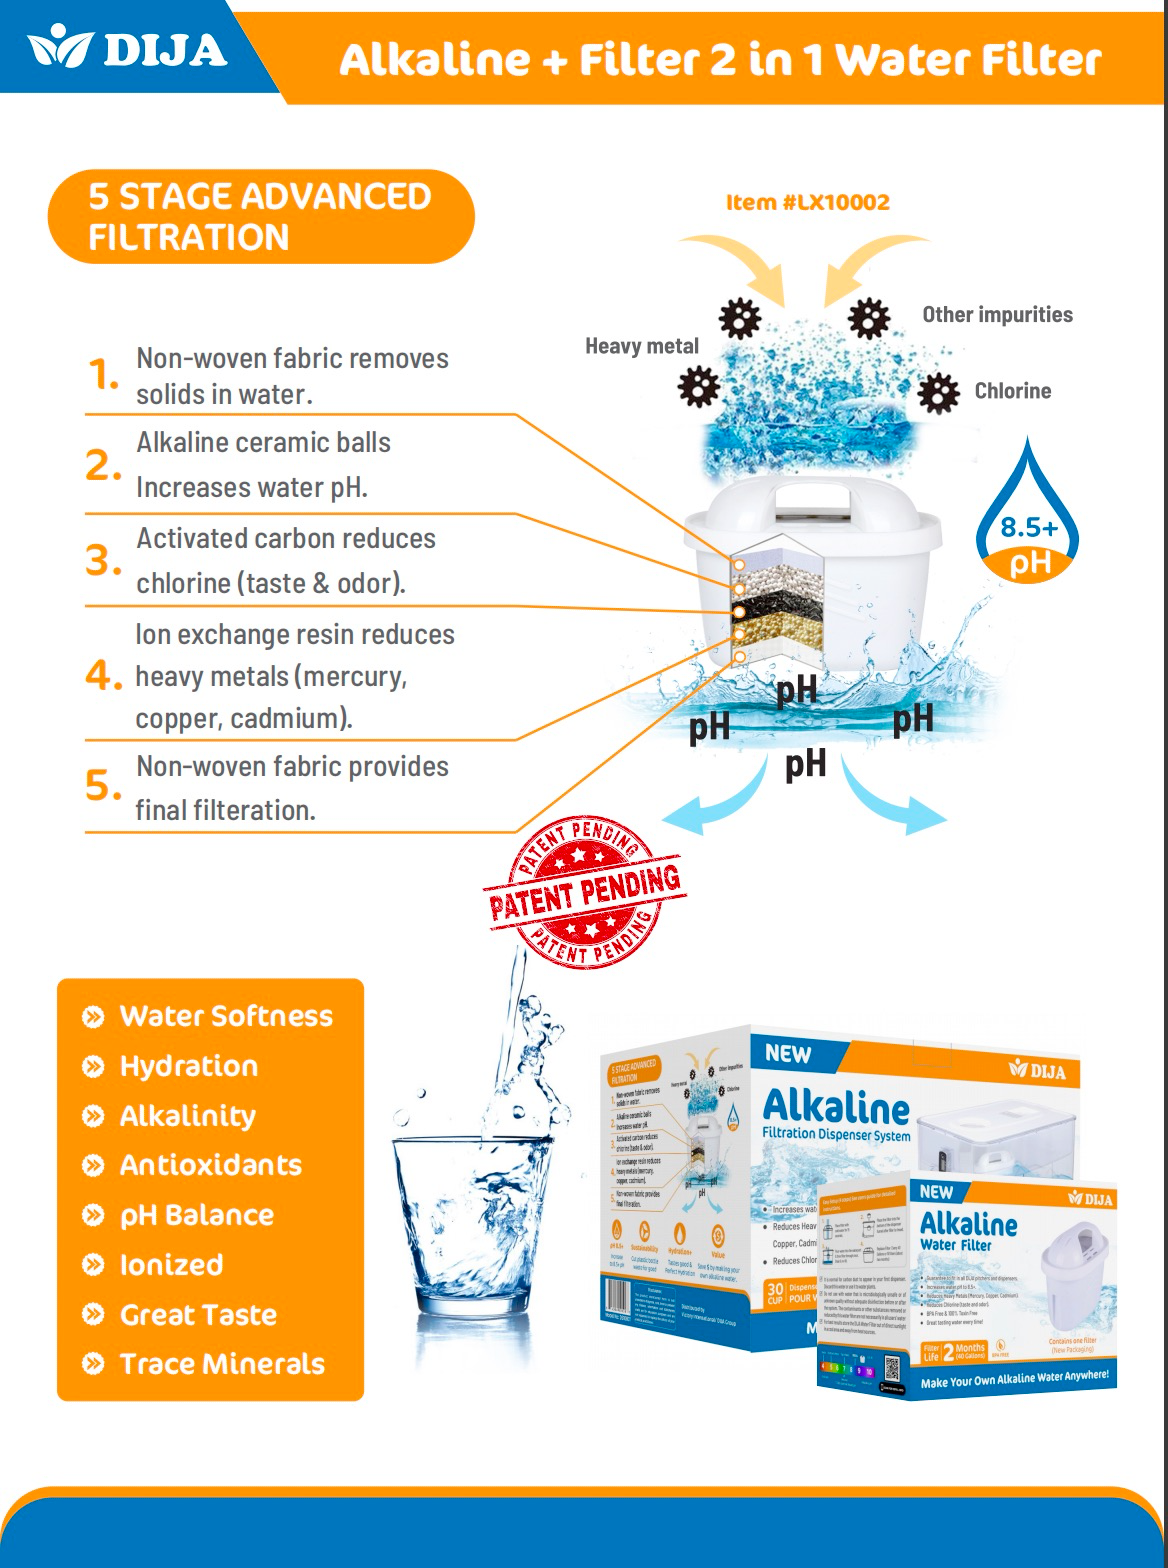 DIJA Certified Alkaline Water Pitcher Filter Replacement 3-Pack, Fits